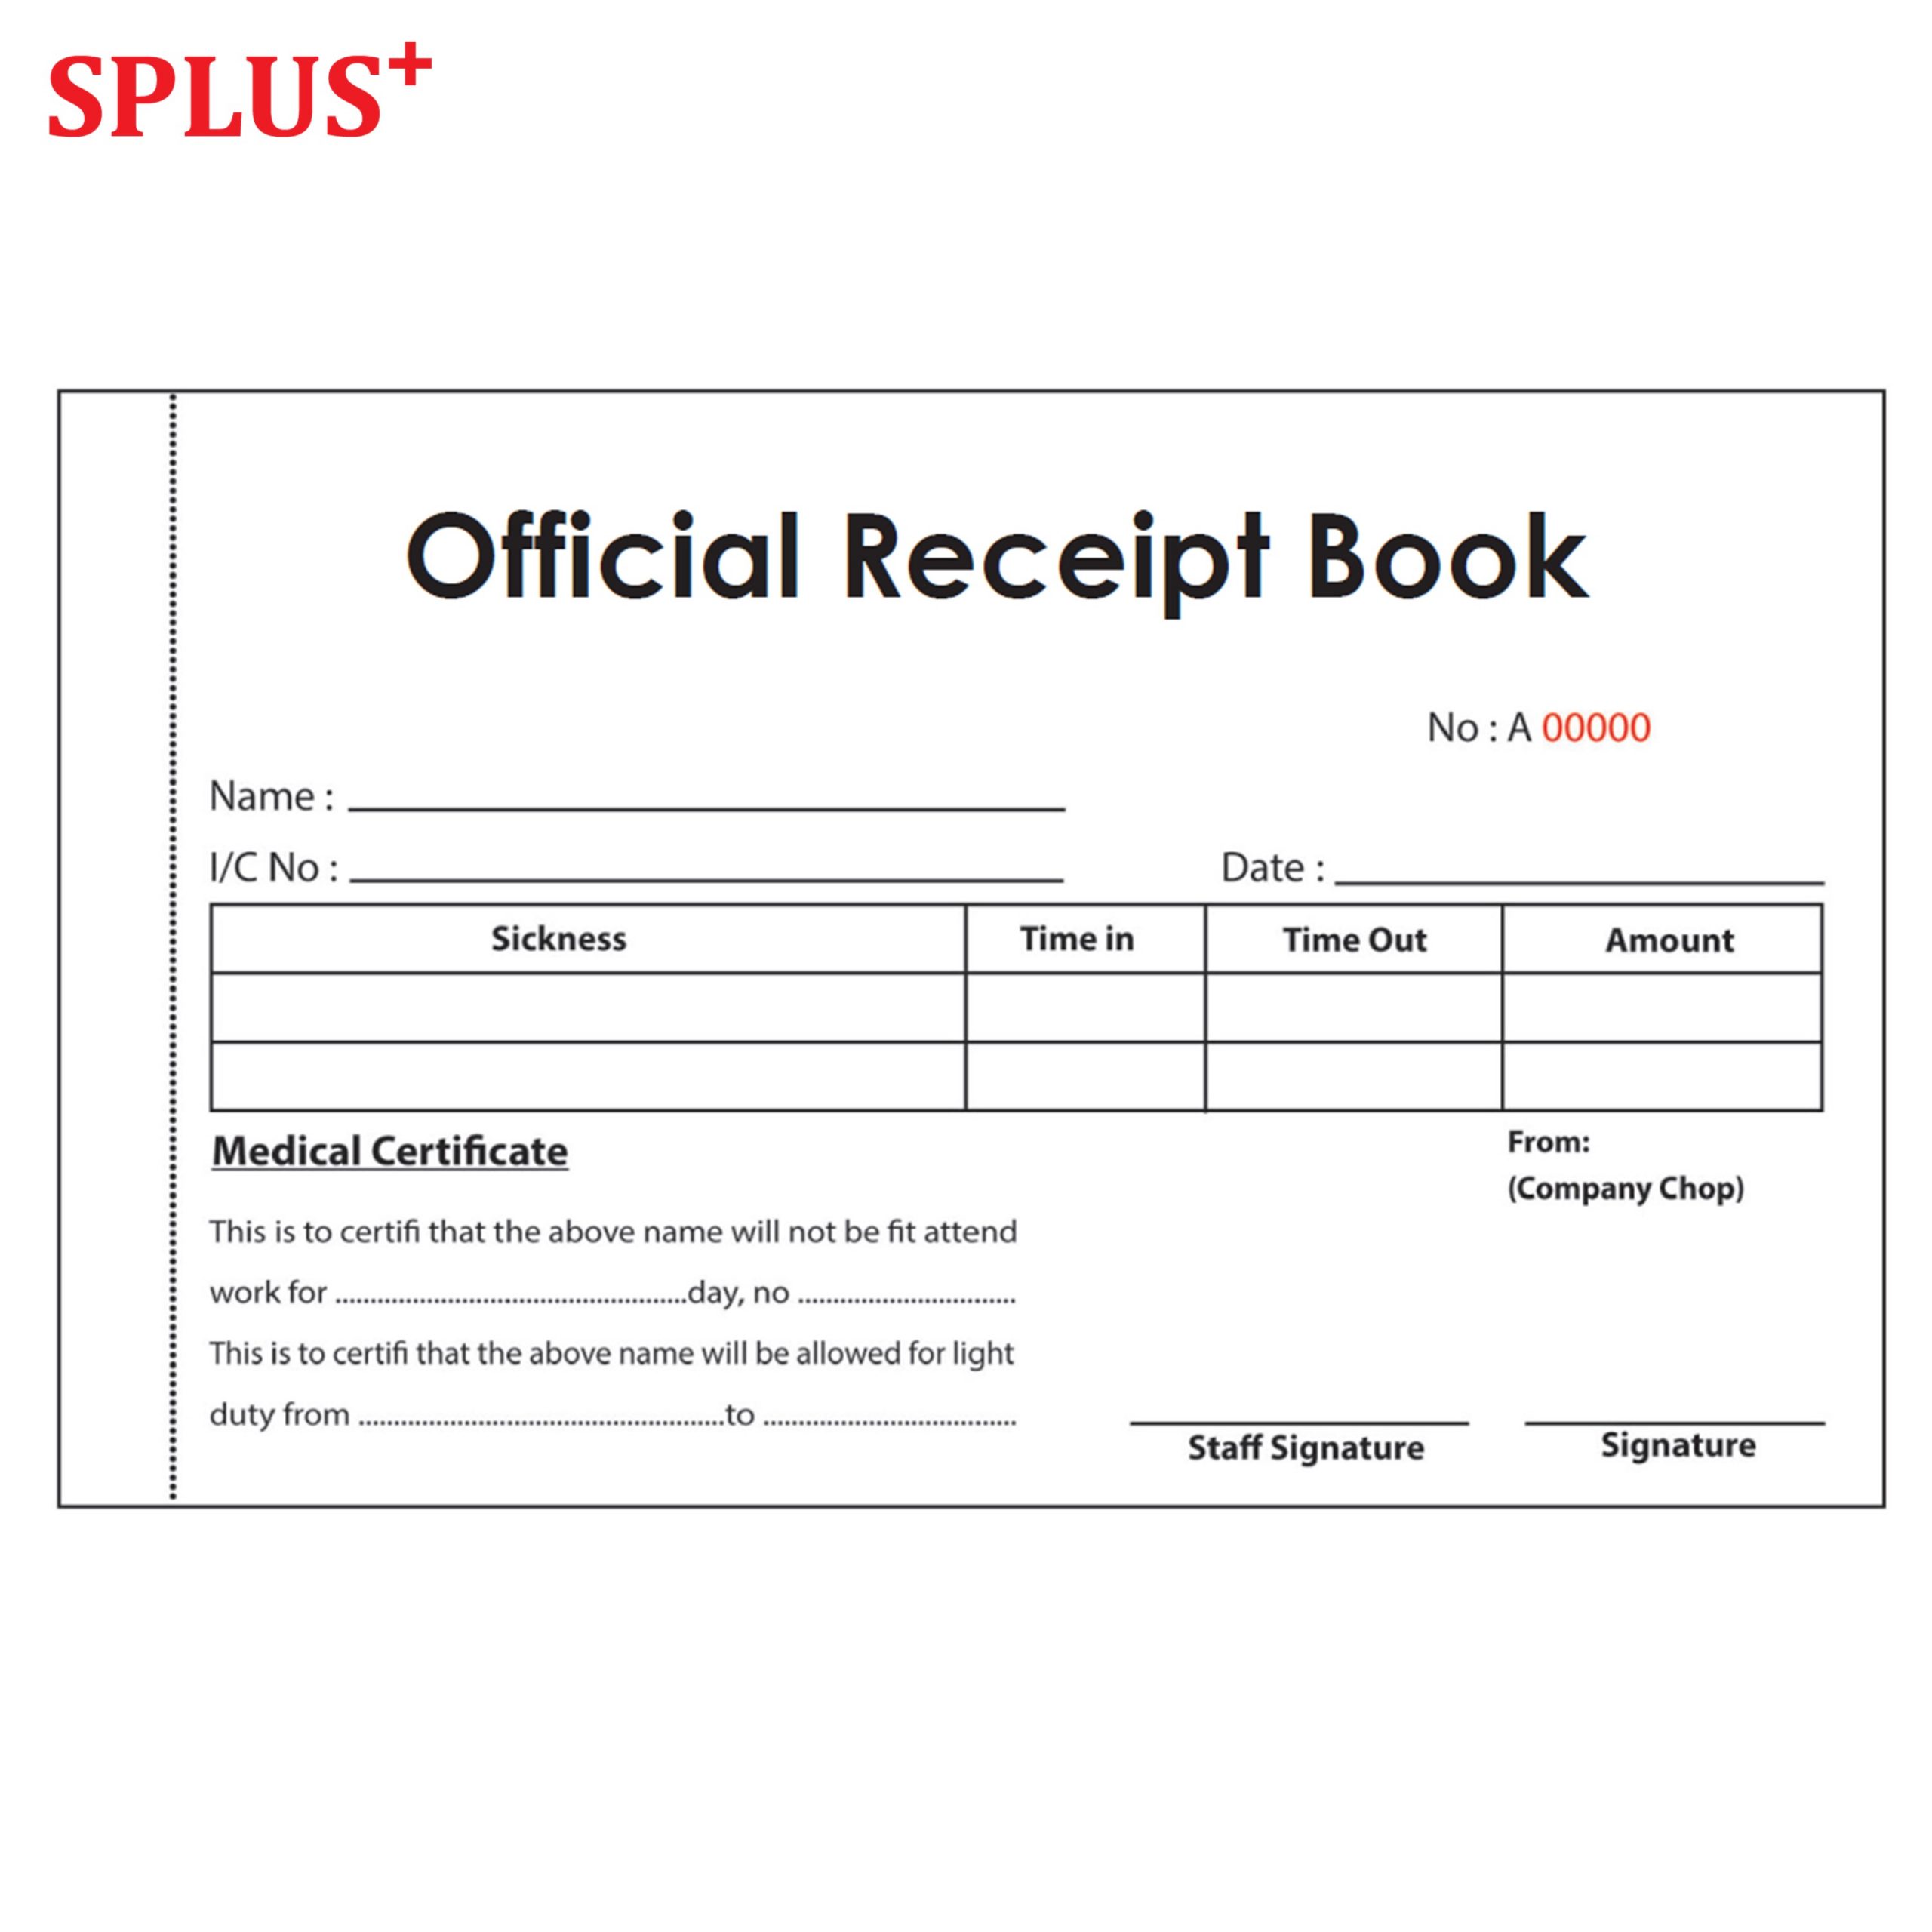 official-receipt-book-splus-medicare